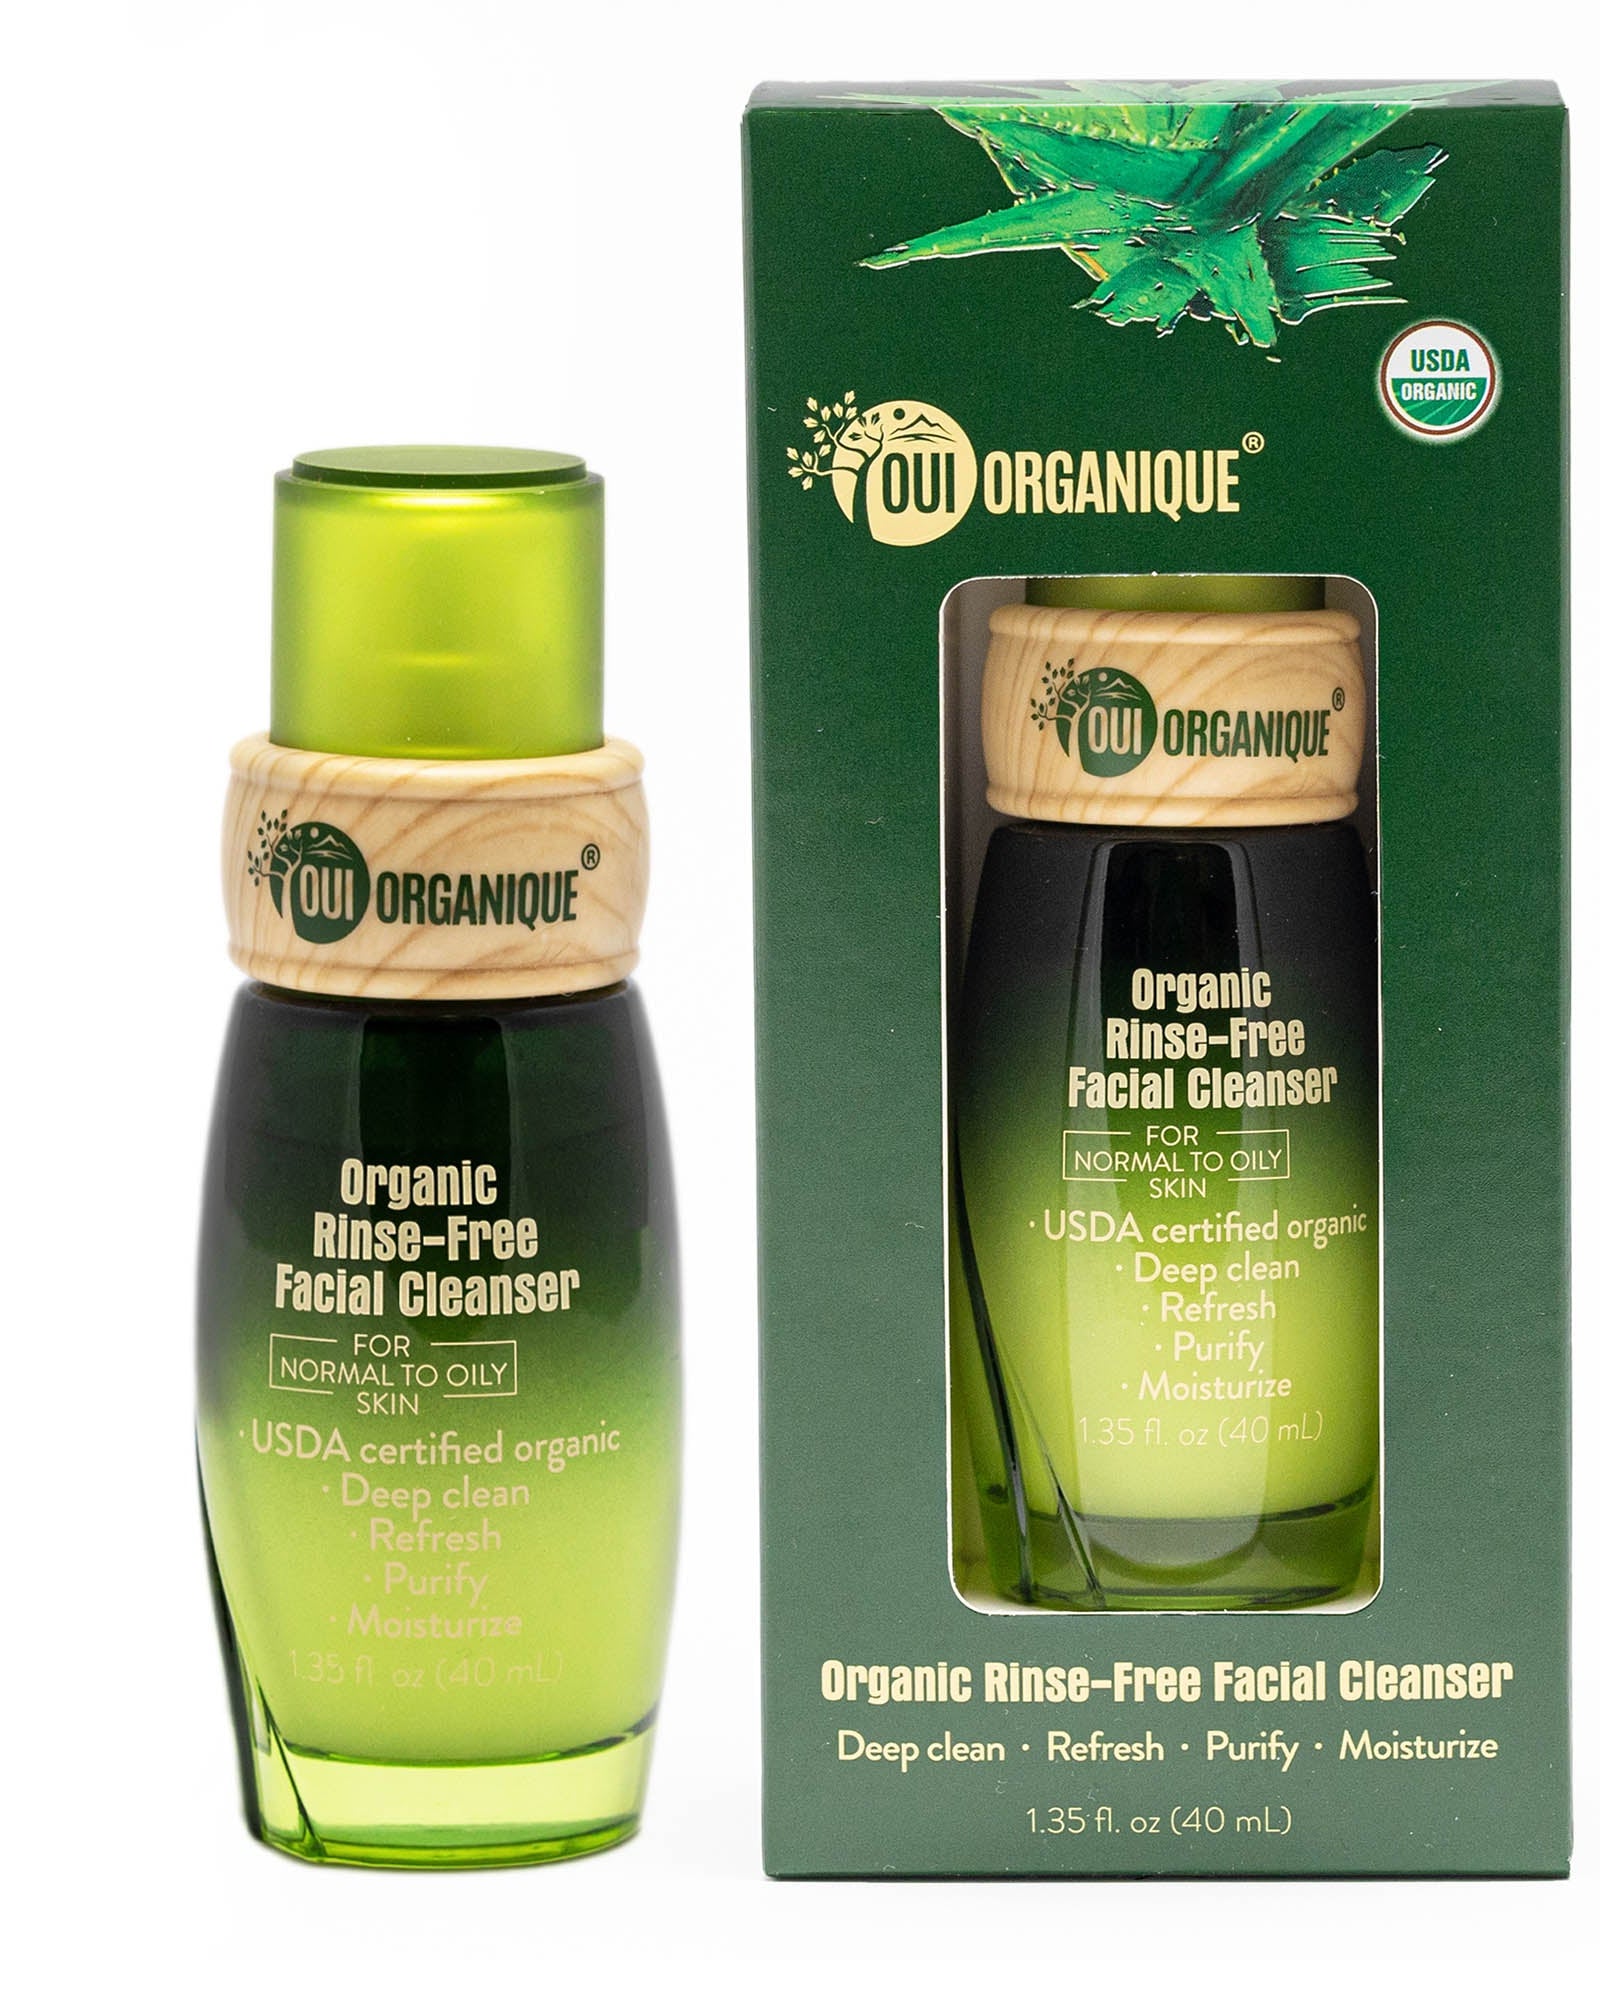 Certified Organic Rinse Free Facial Cleanser|Aloe vera|purify|sensitive skin|Moisturize OUI ORGANIQUE